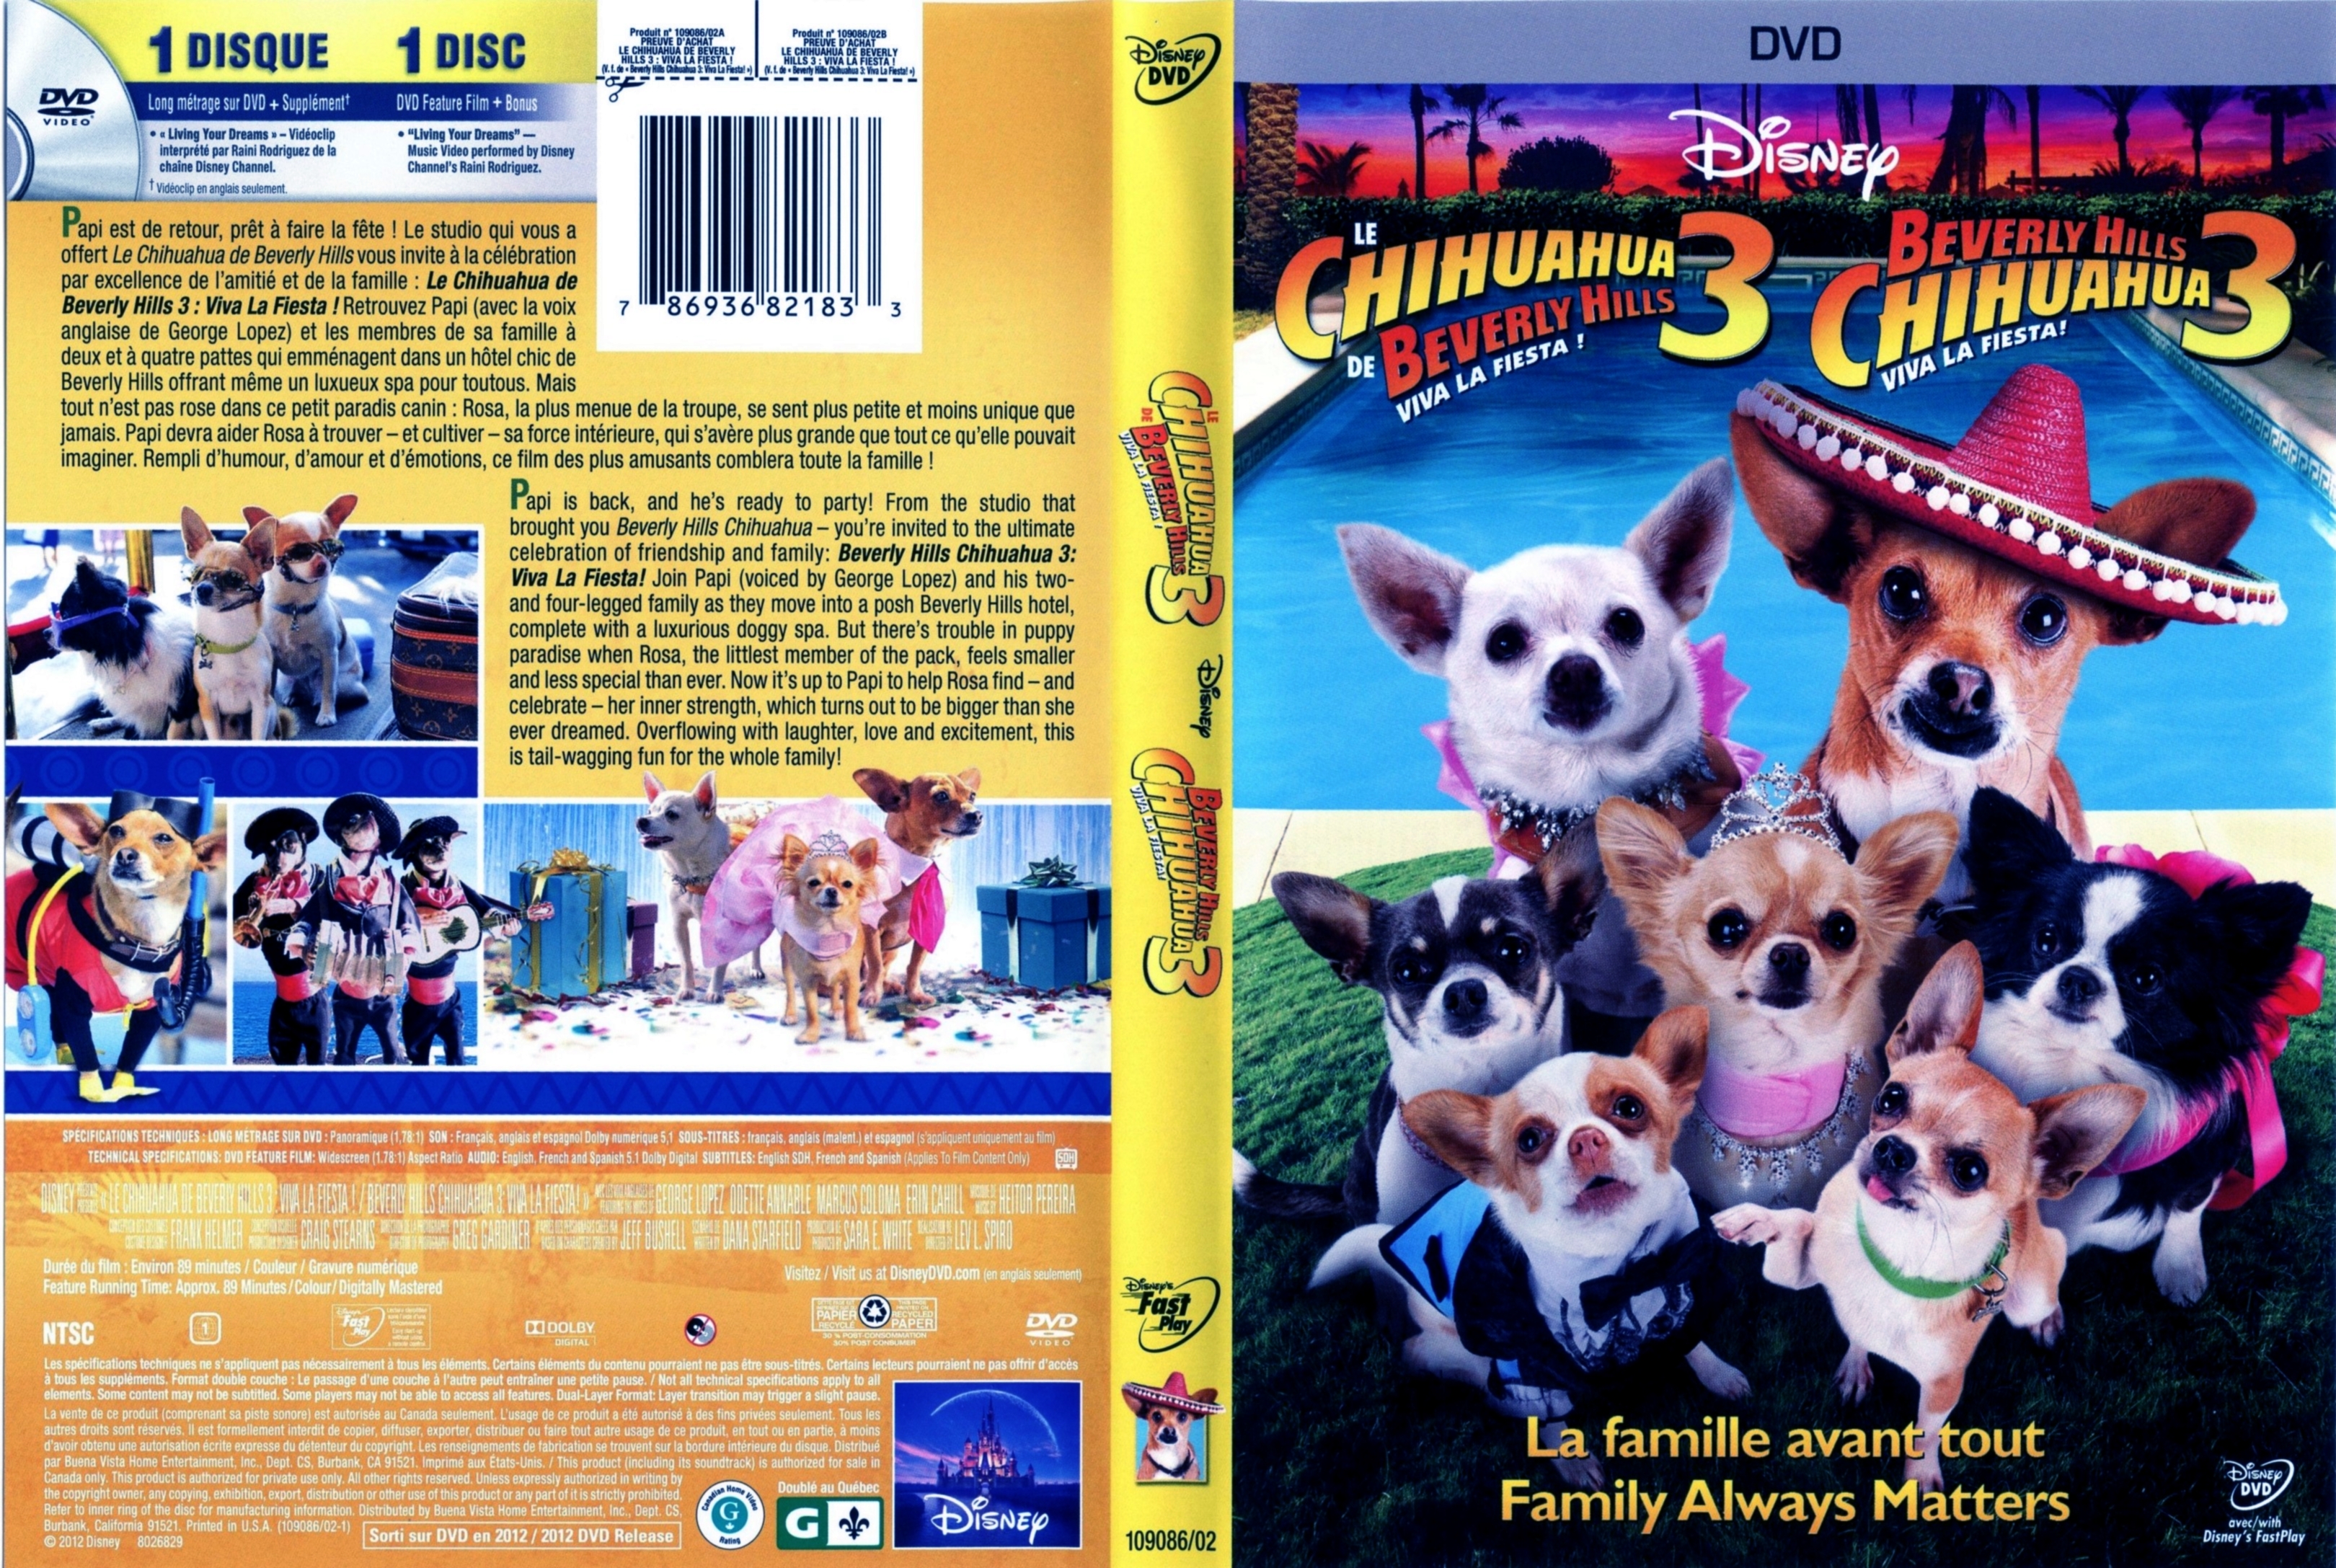 Jaquette DVD Le Chihuahua de Beverly Hills 3 (Canadienne)